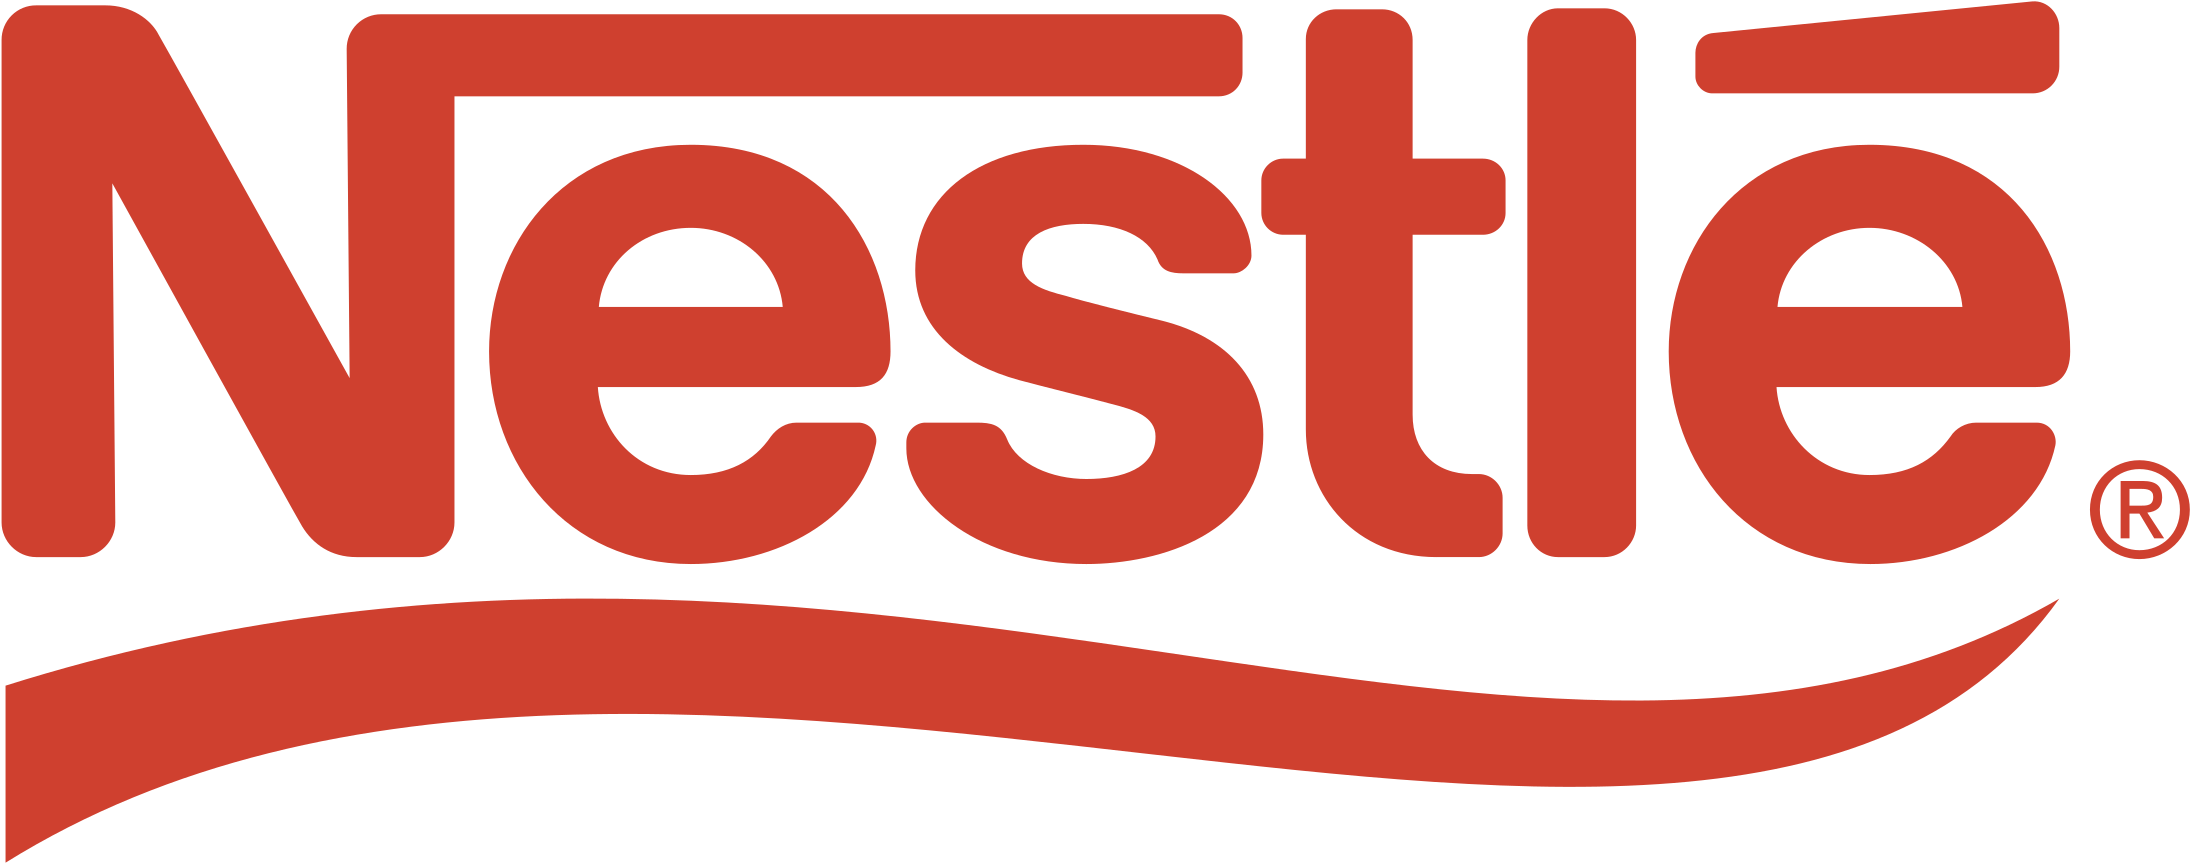 Nestlé Logo PNG Free Download